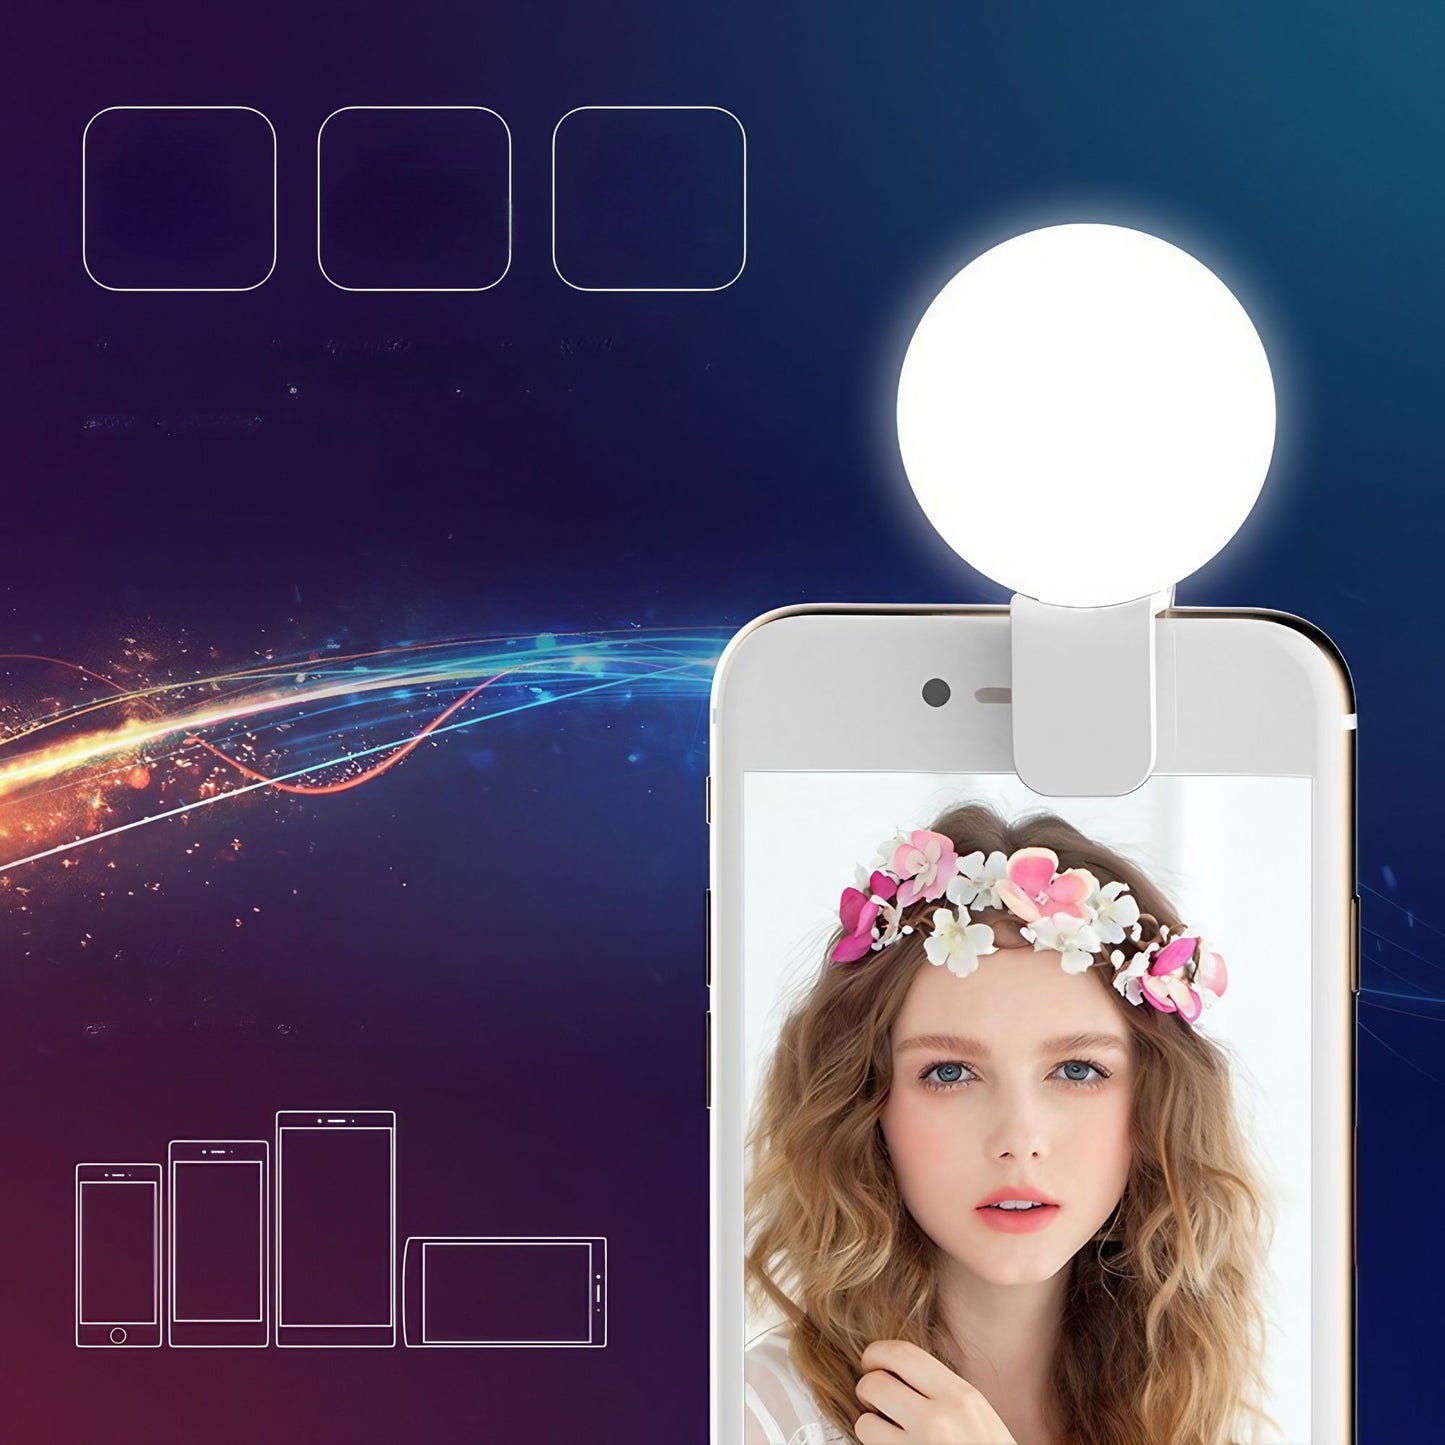 Revolutionary Mobile Phone Camera Flashlight: Illuminate Your World with Unmatched Brilliance